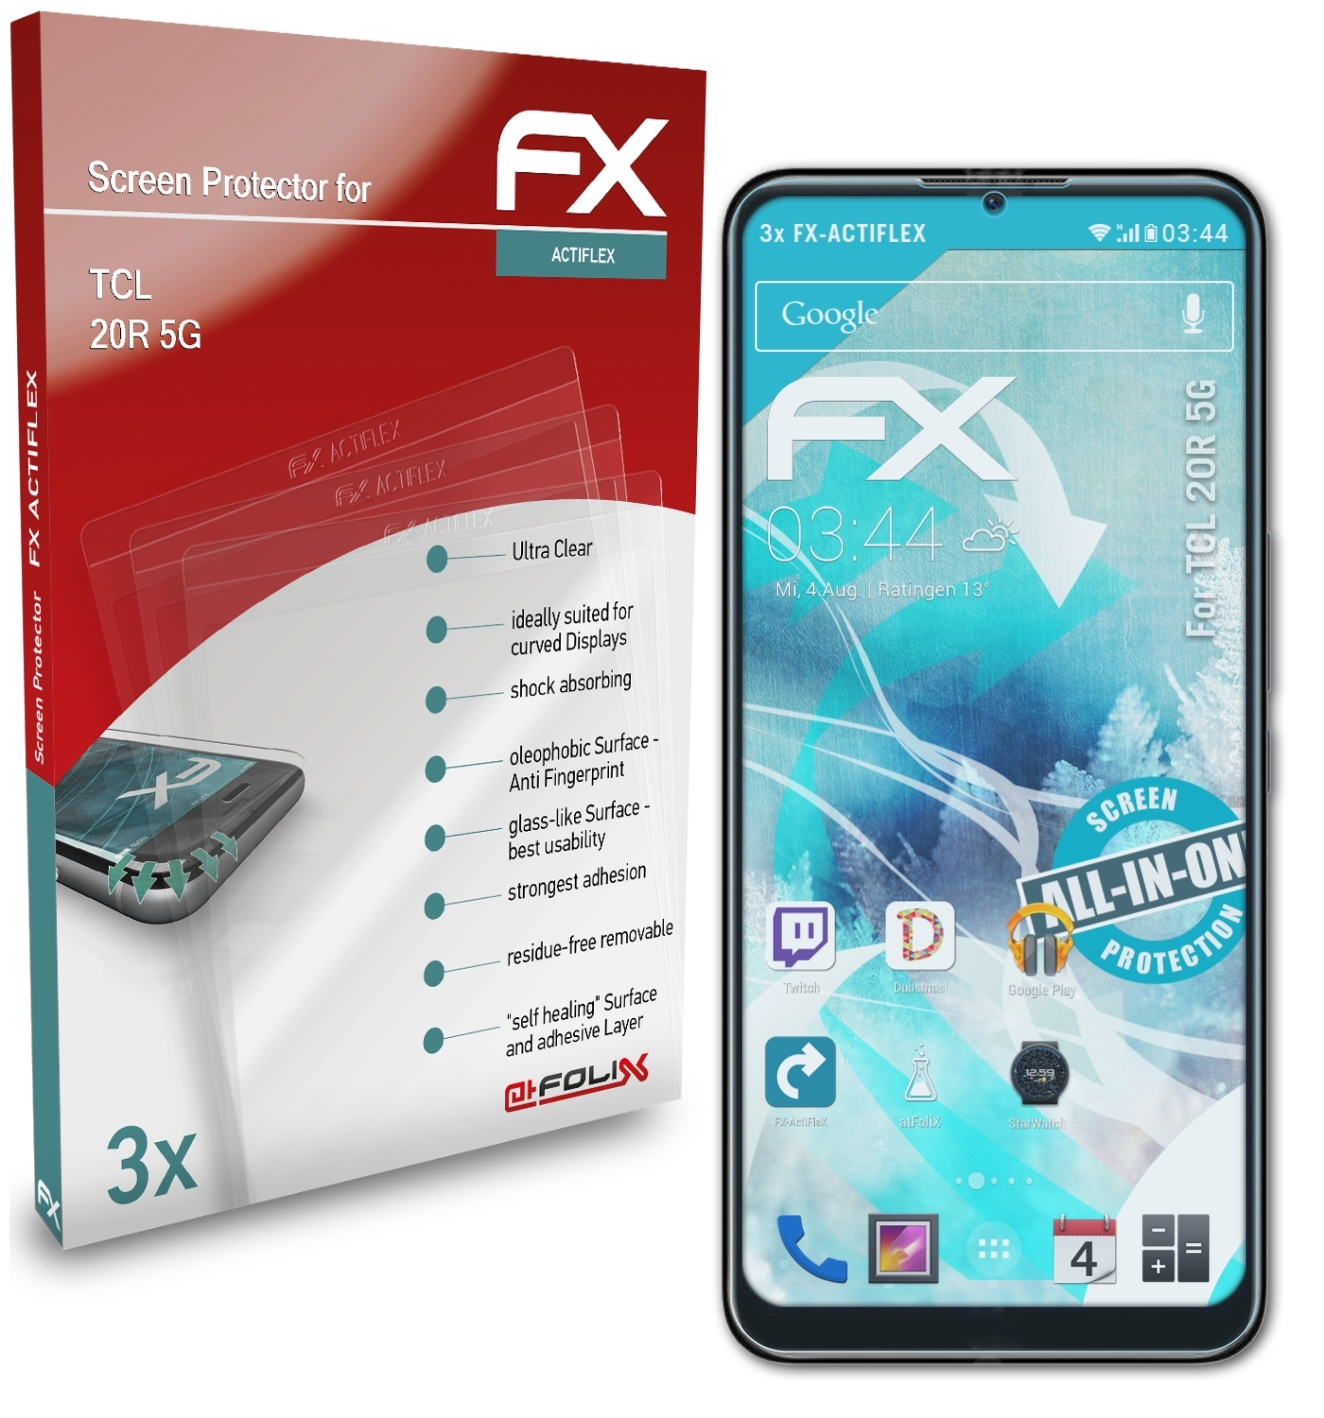 TCL ATFOLIX FX-ActiFleX 20R 5G) Displayschutz(für 3x